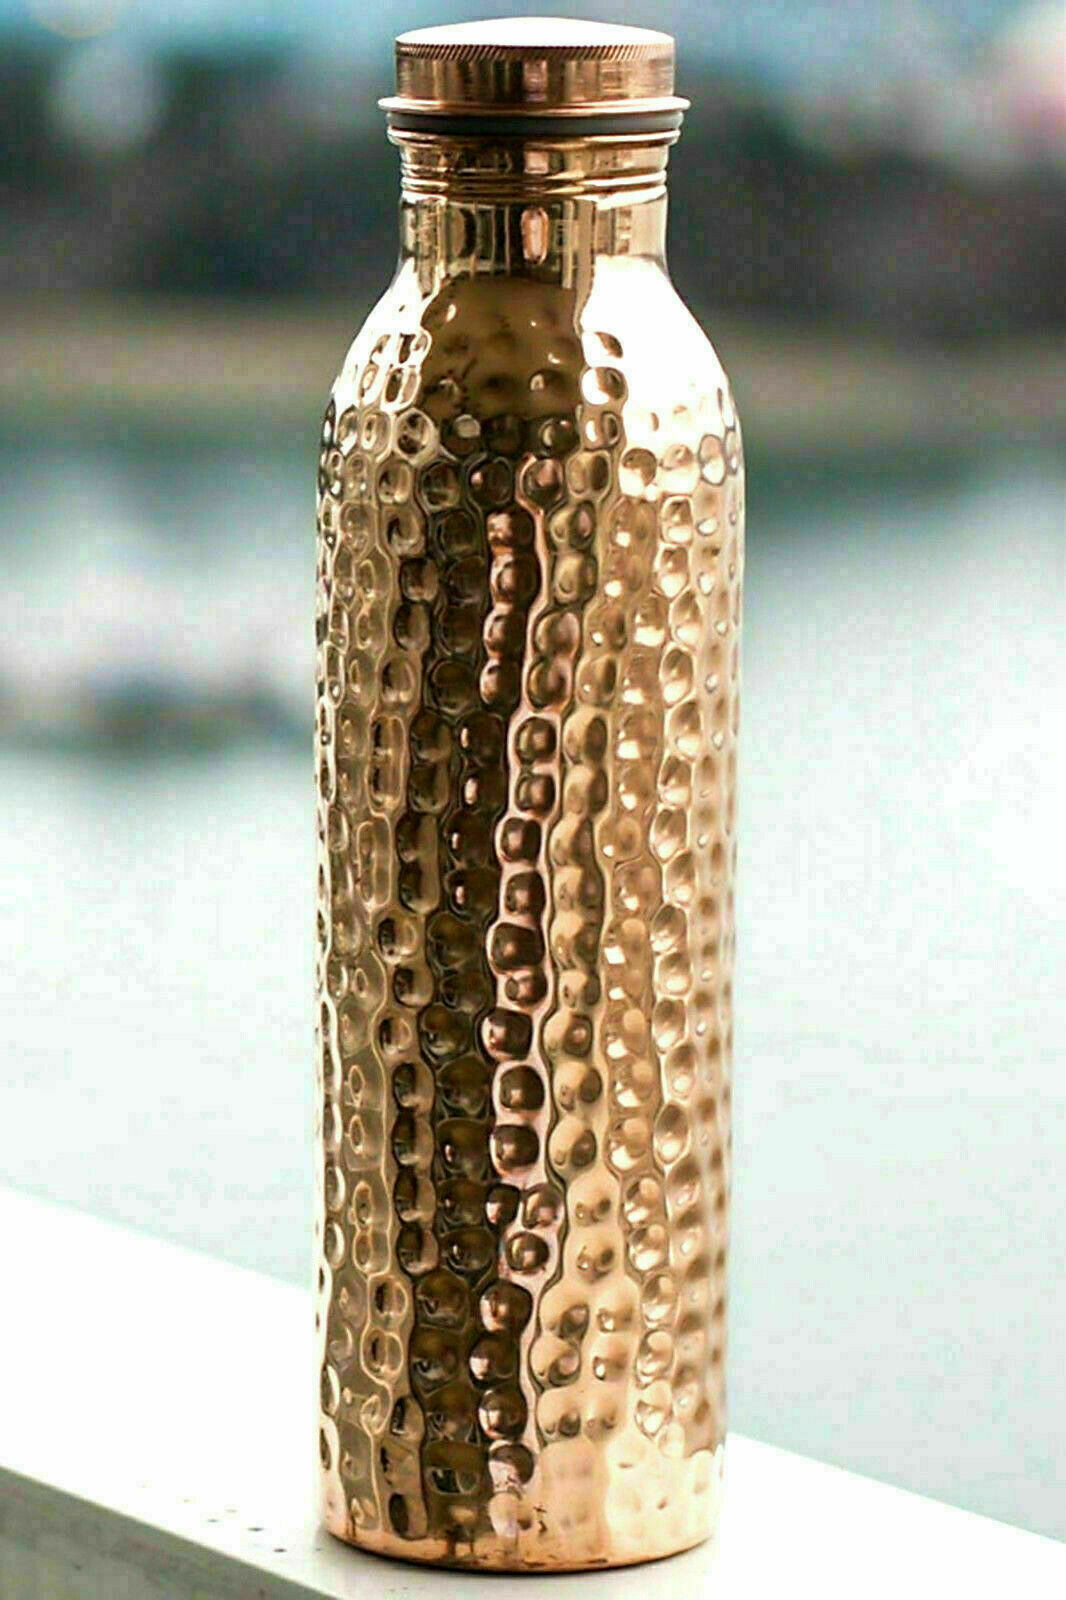 Copper Water Bottle for Yoga & Ayurveda Benefits